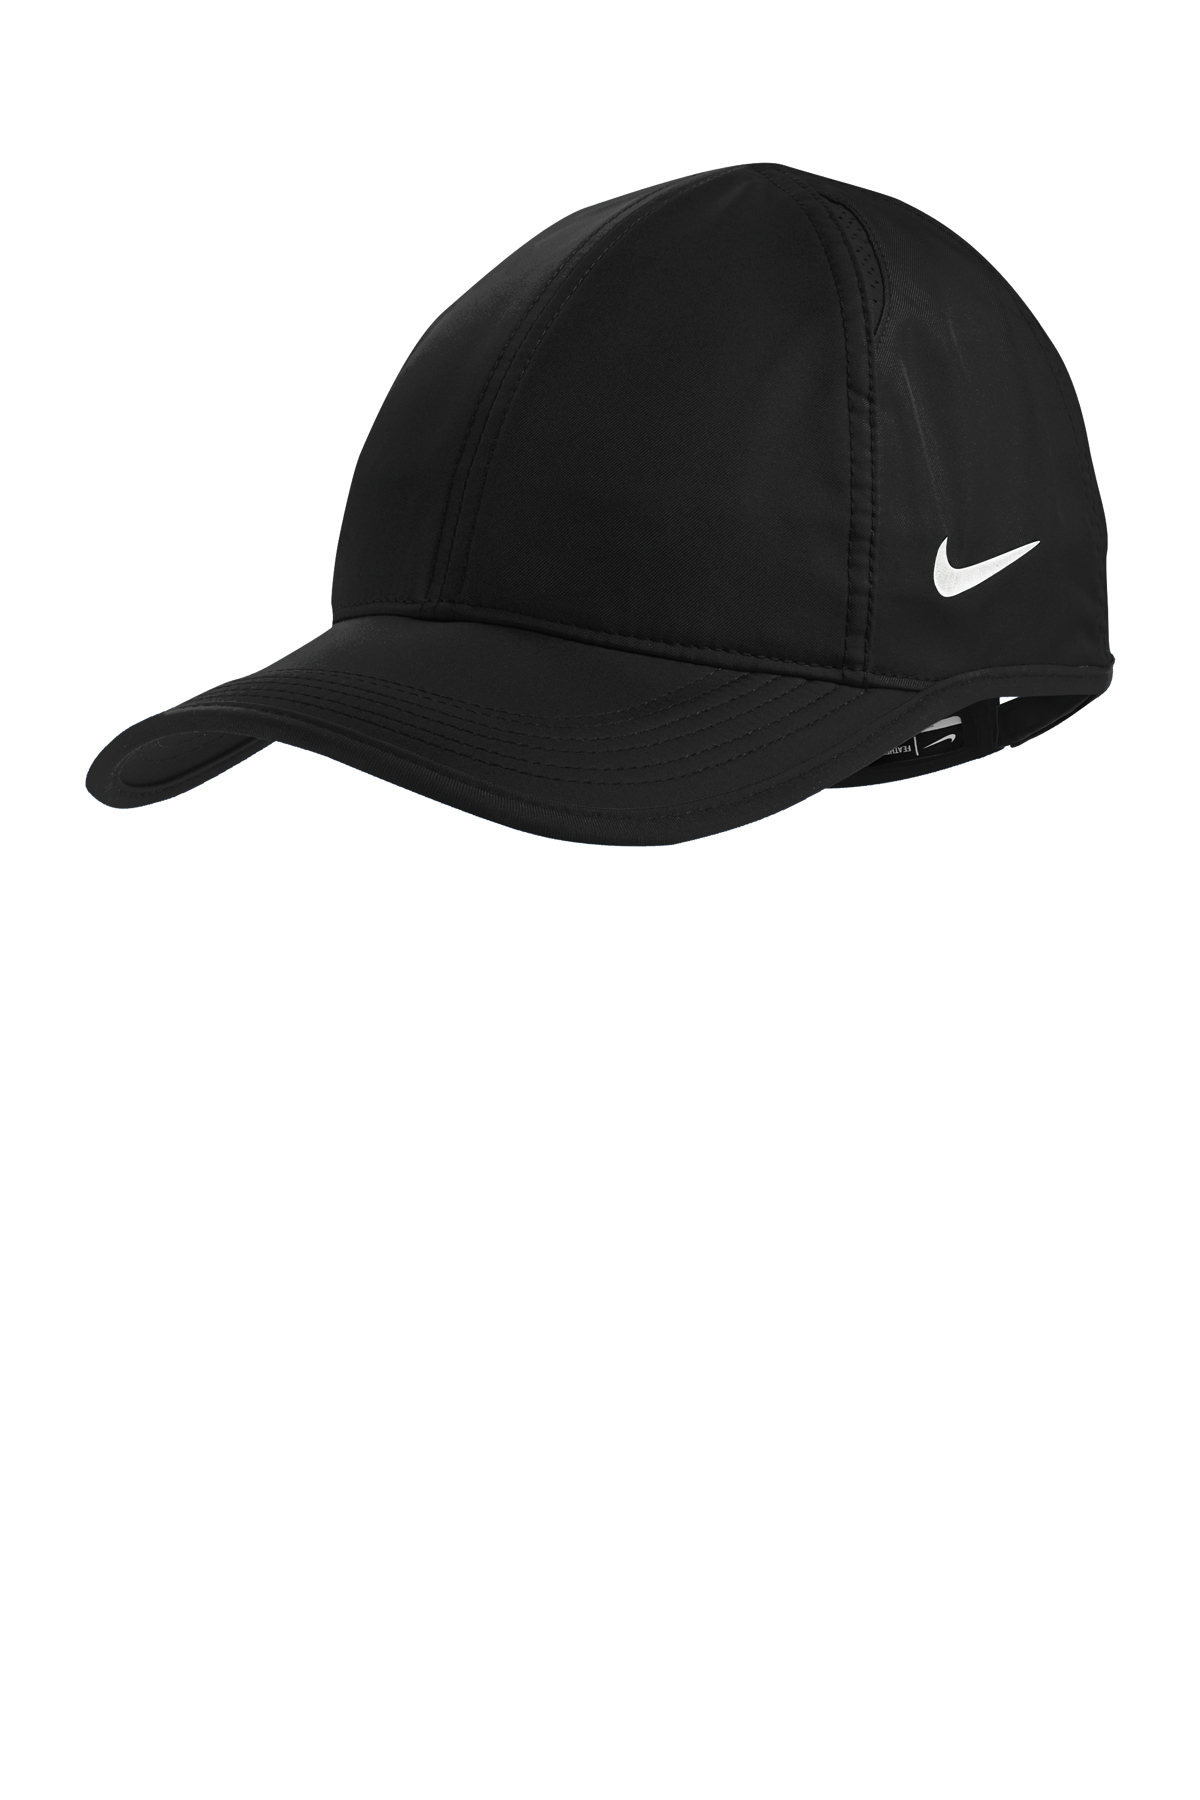 Nike Dri-FIT Featherlight Performance Cap, Product